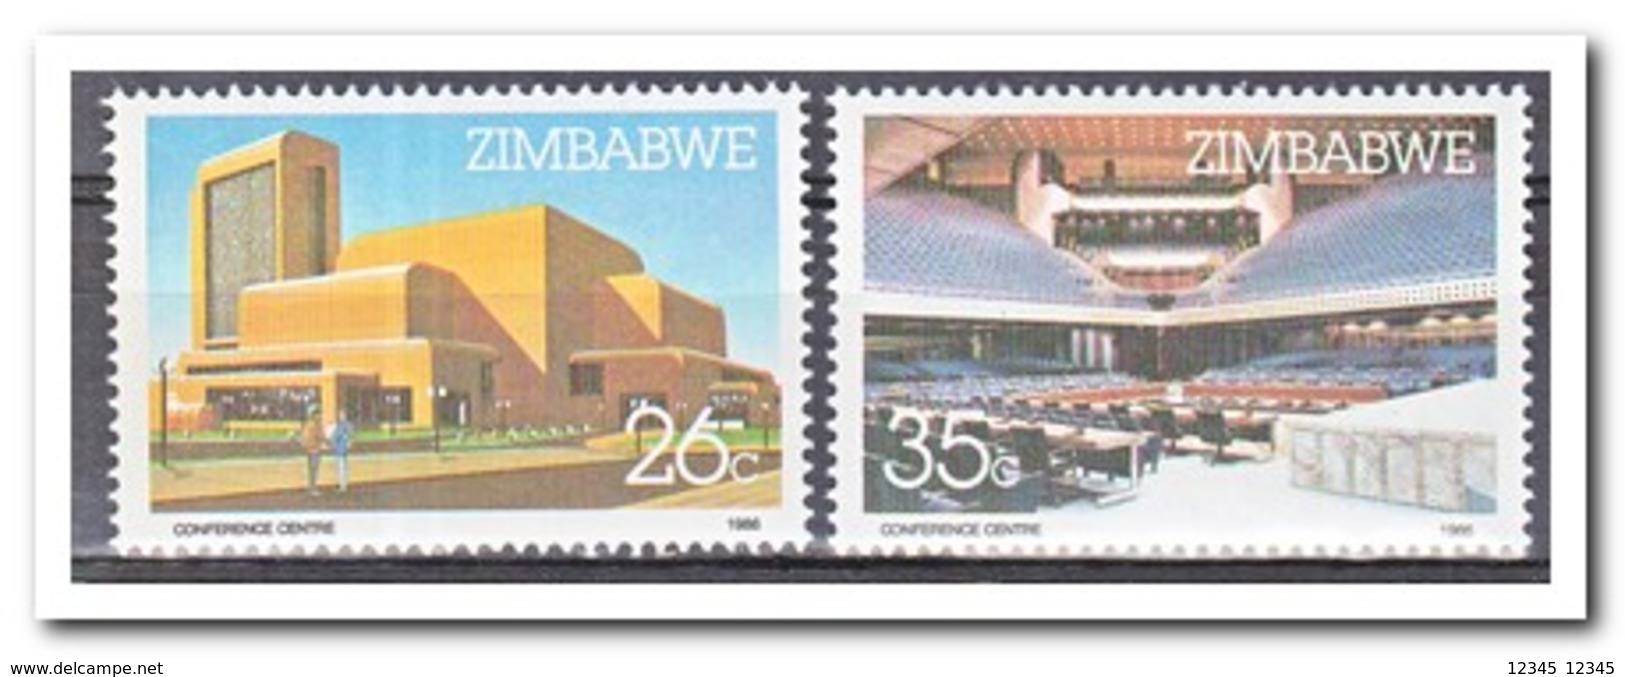 Zimbabwe 1986, Postfris MNH, Harare Conference Center - Zimbabwe (1980-...)